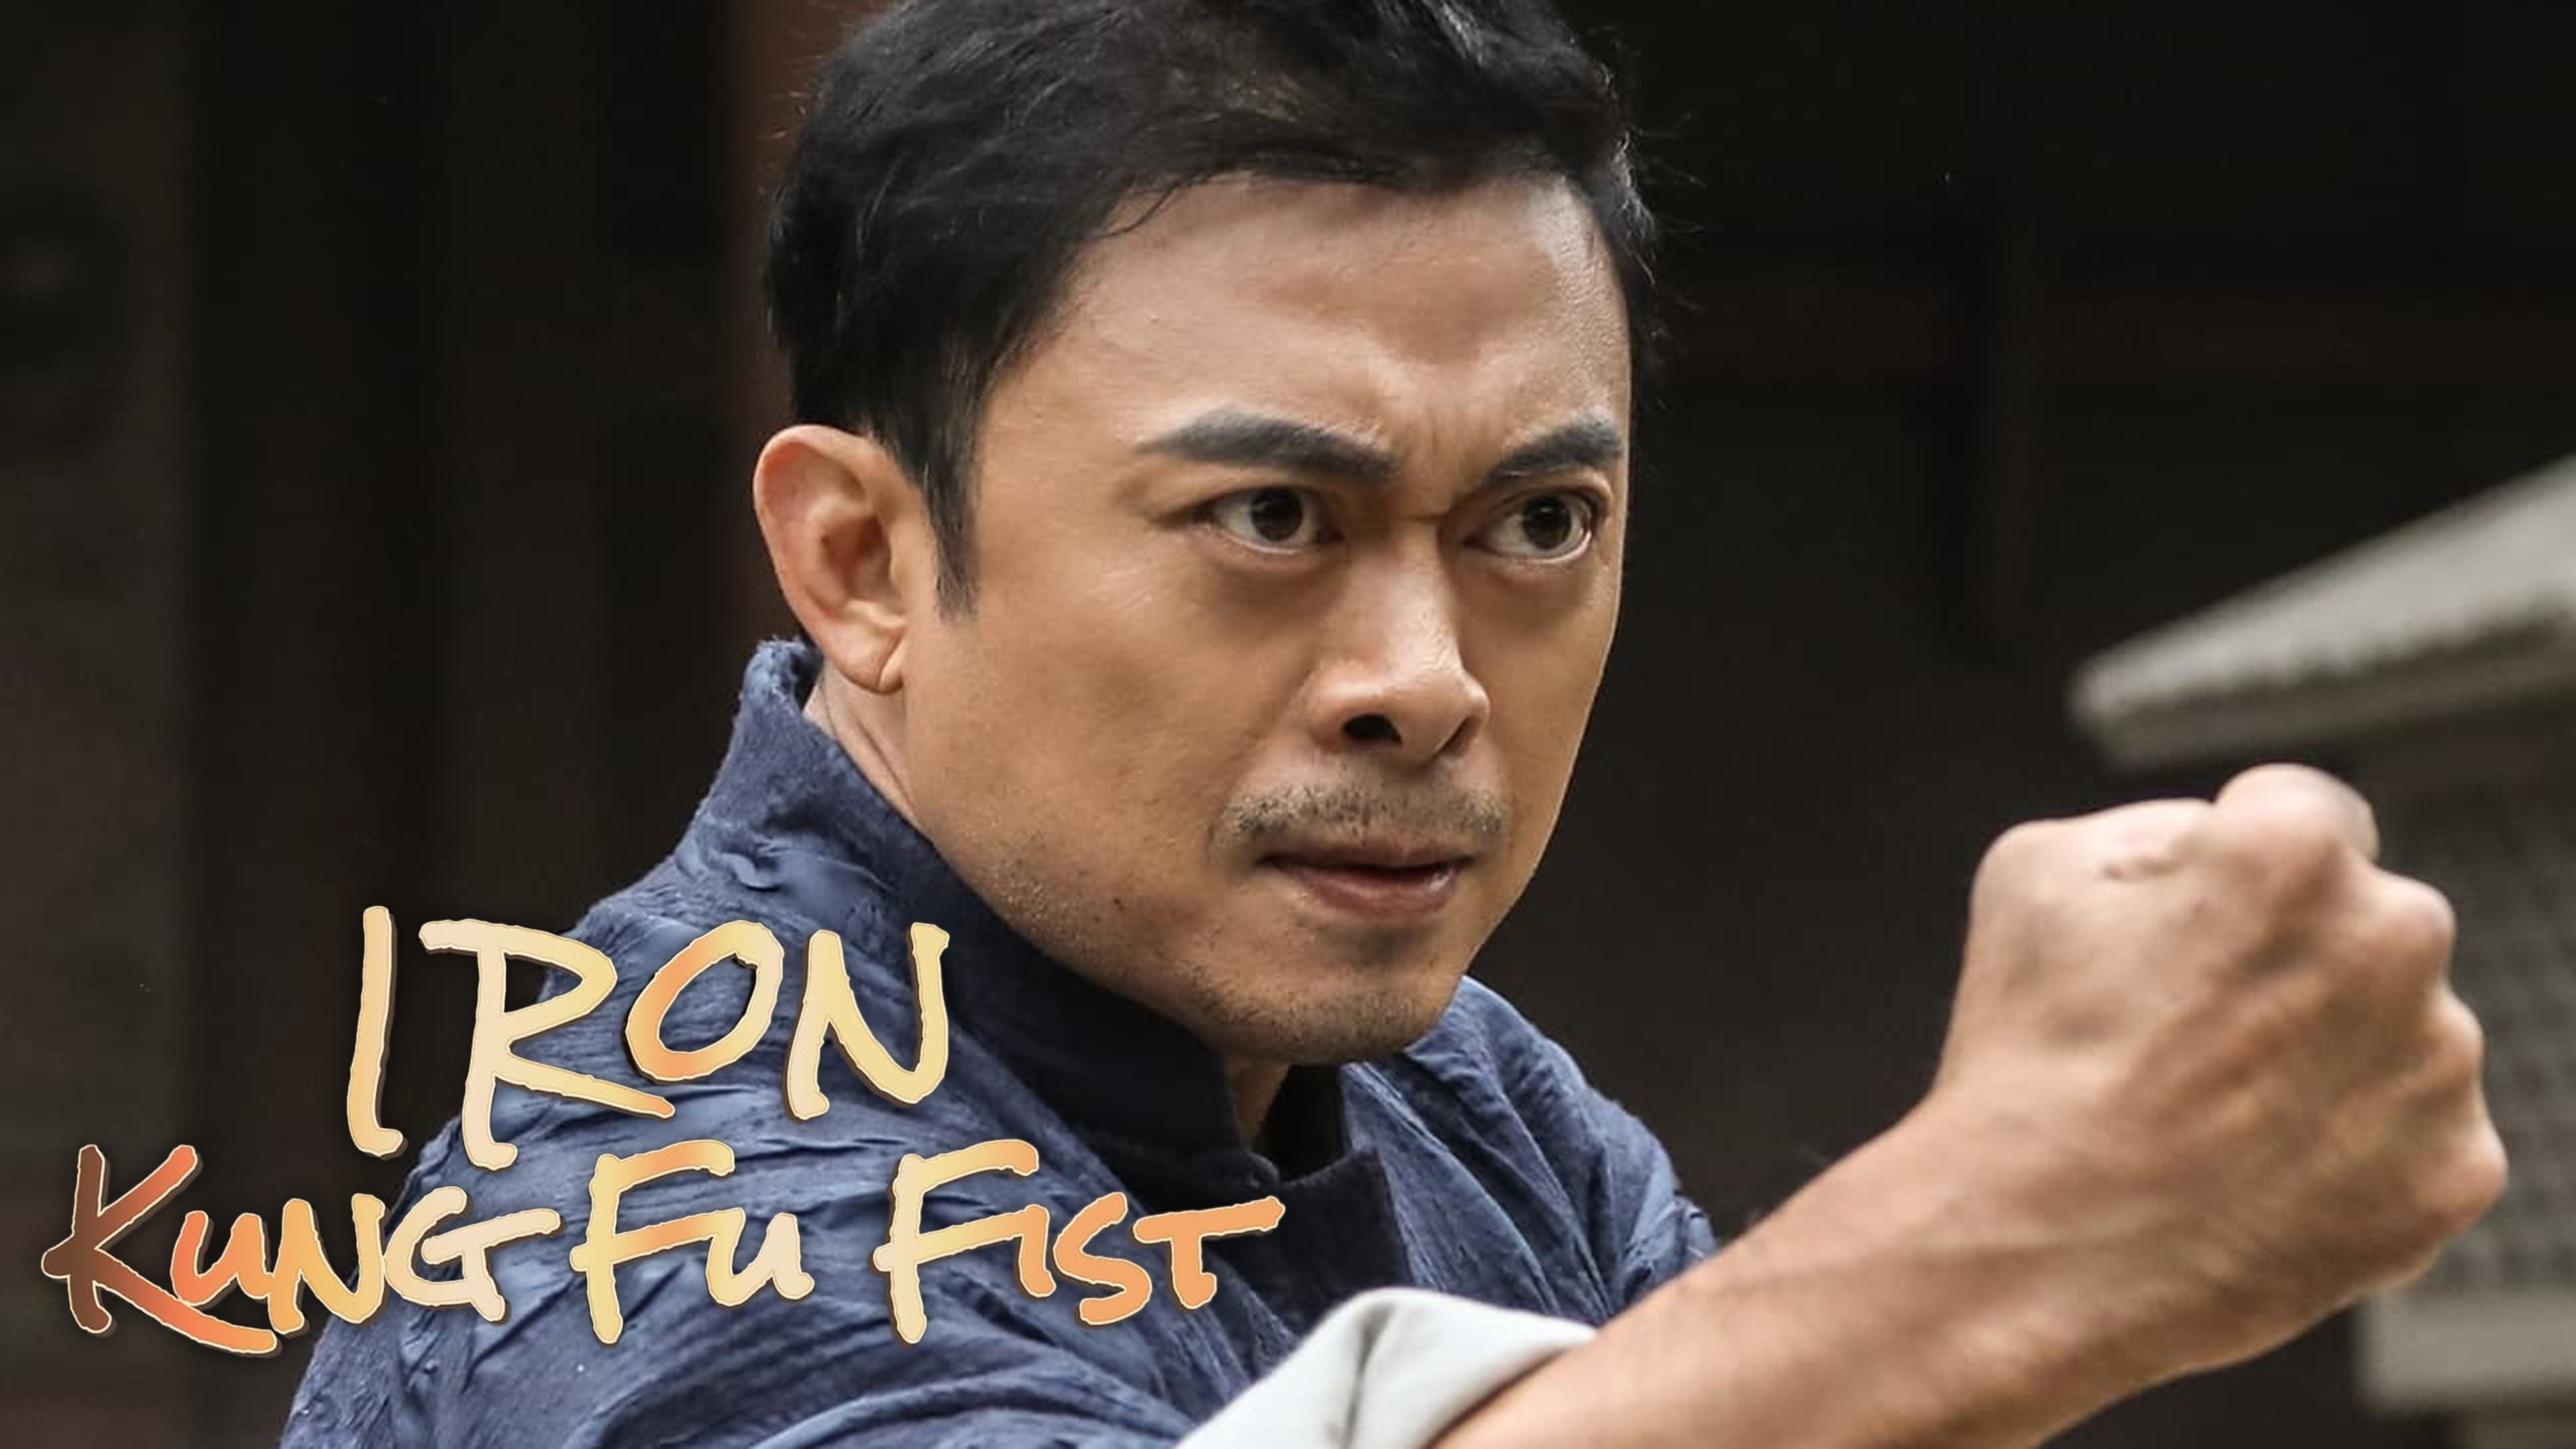 Iron Kung Fu Fist 2022 Hindi Dual Audio 1080p | 720p | 480p HDRip ESub Download